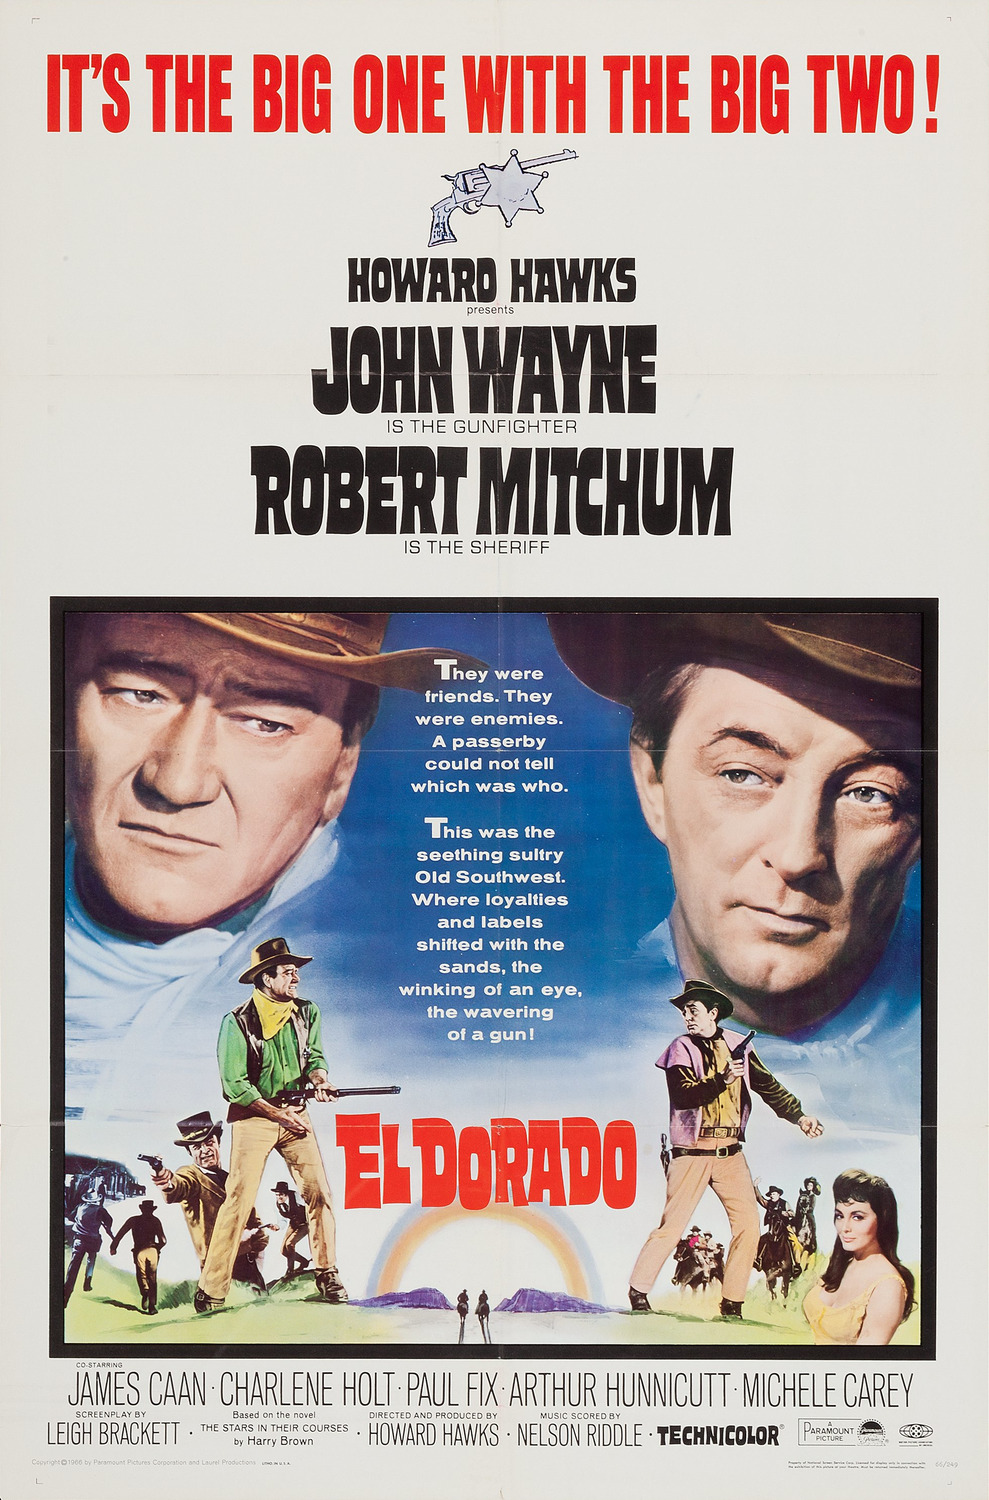 Extra Large Movie Poster Image for El Dorado (#1 of 2)